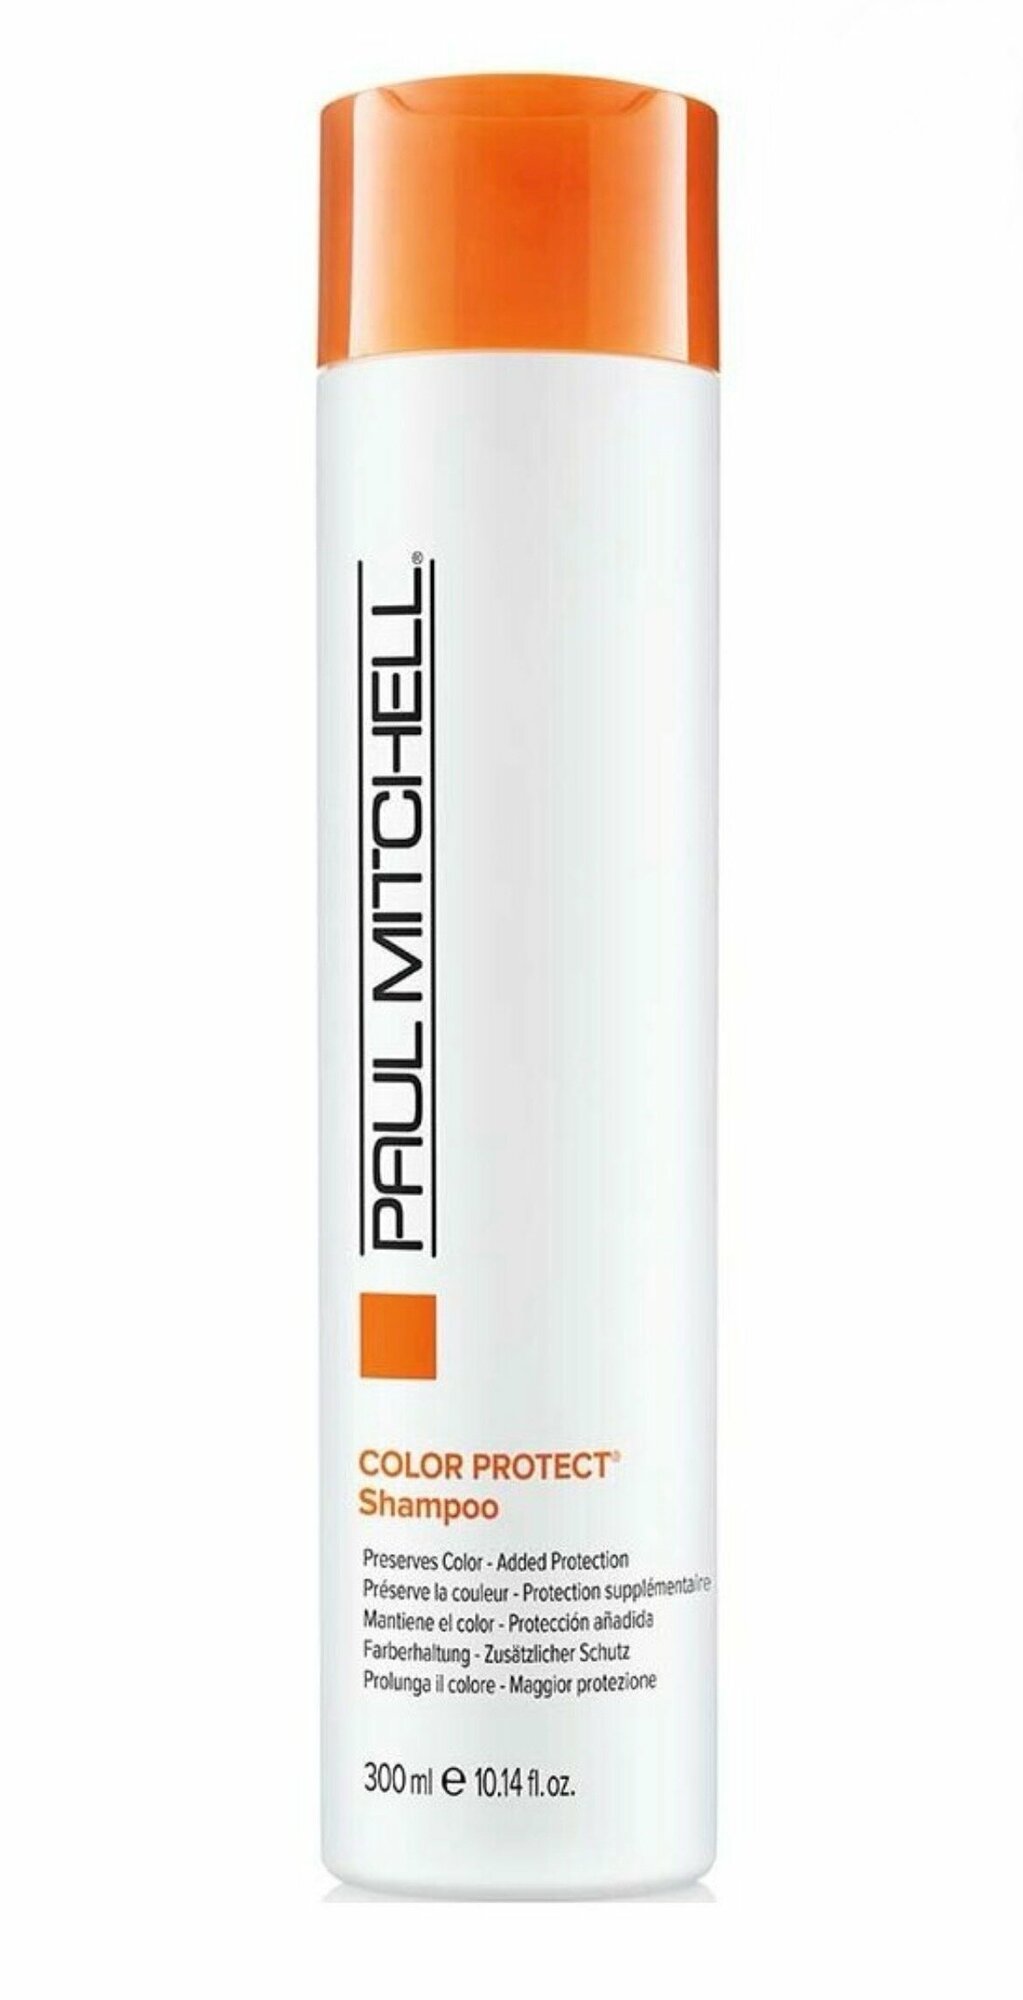 Paul Mitchell Color Protect Daily Shampoo - Шампунь для защиты цвета 300 мл